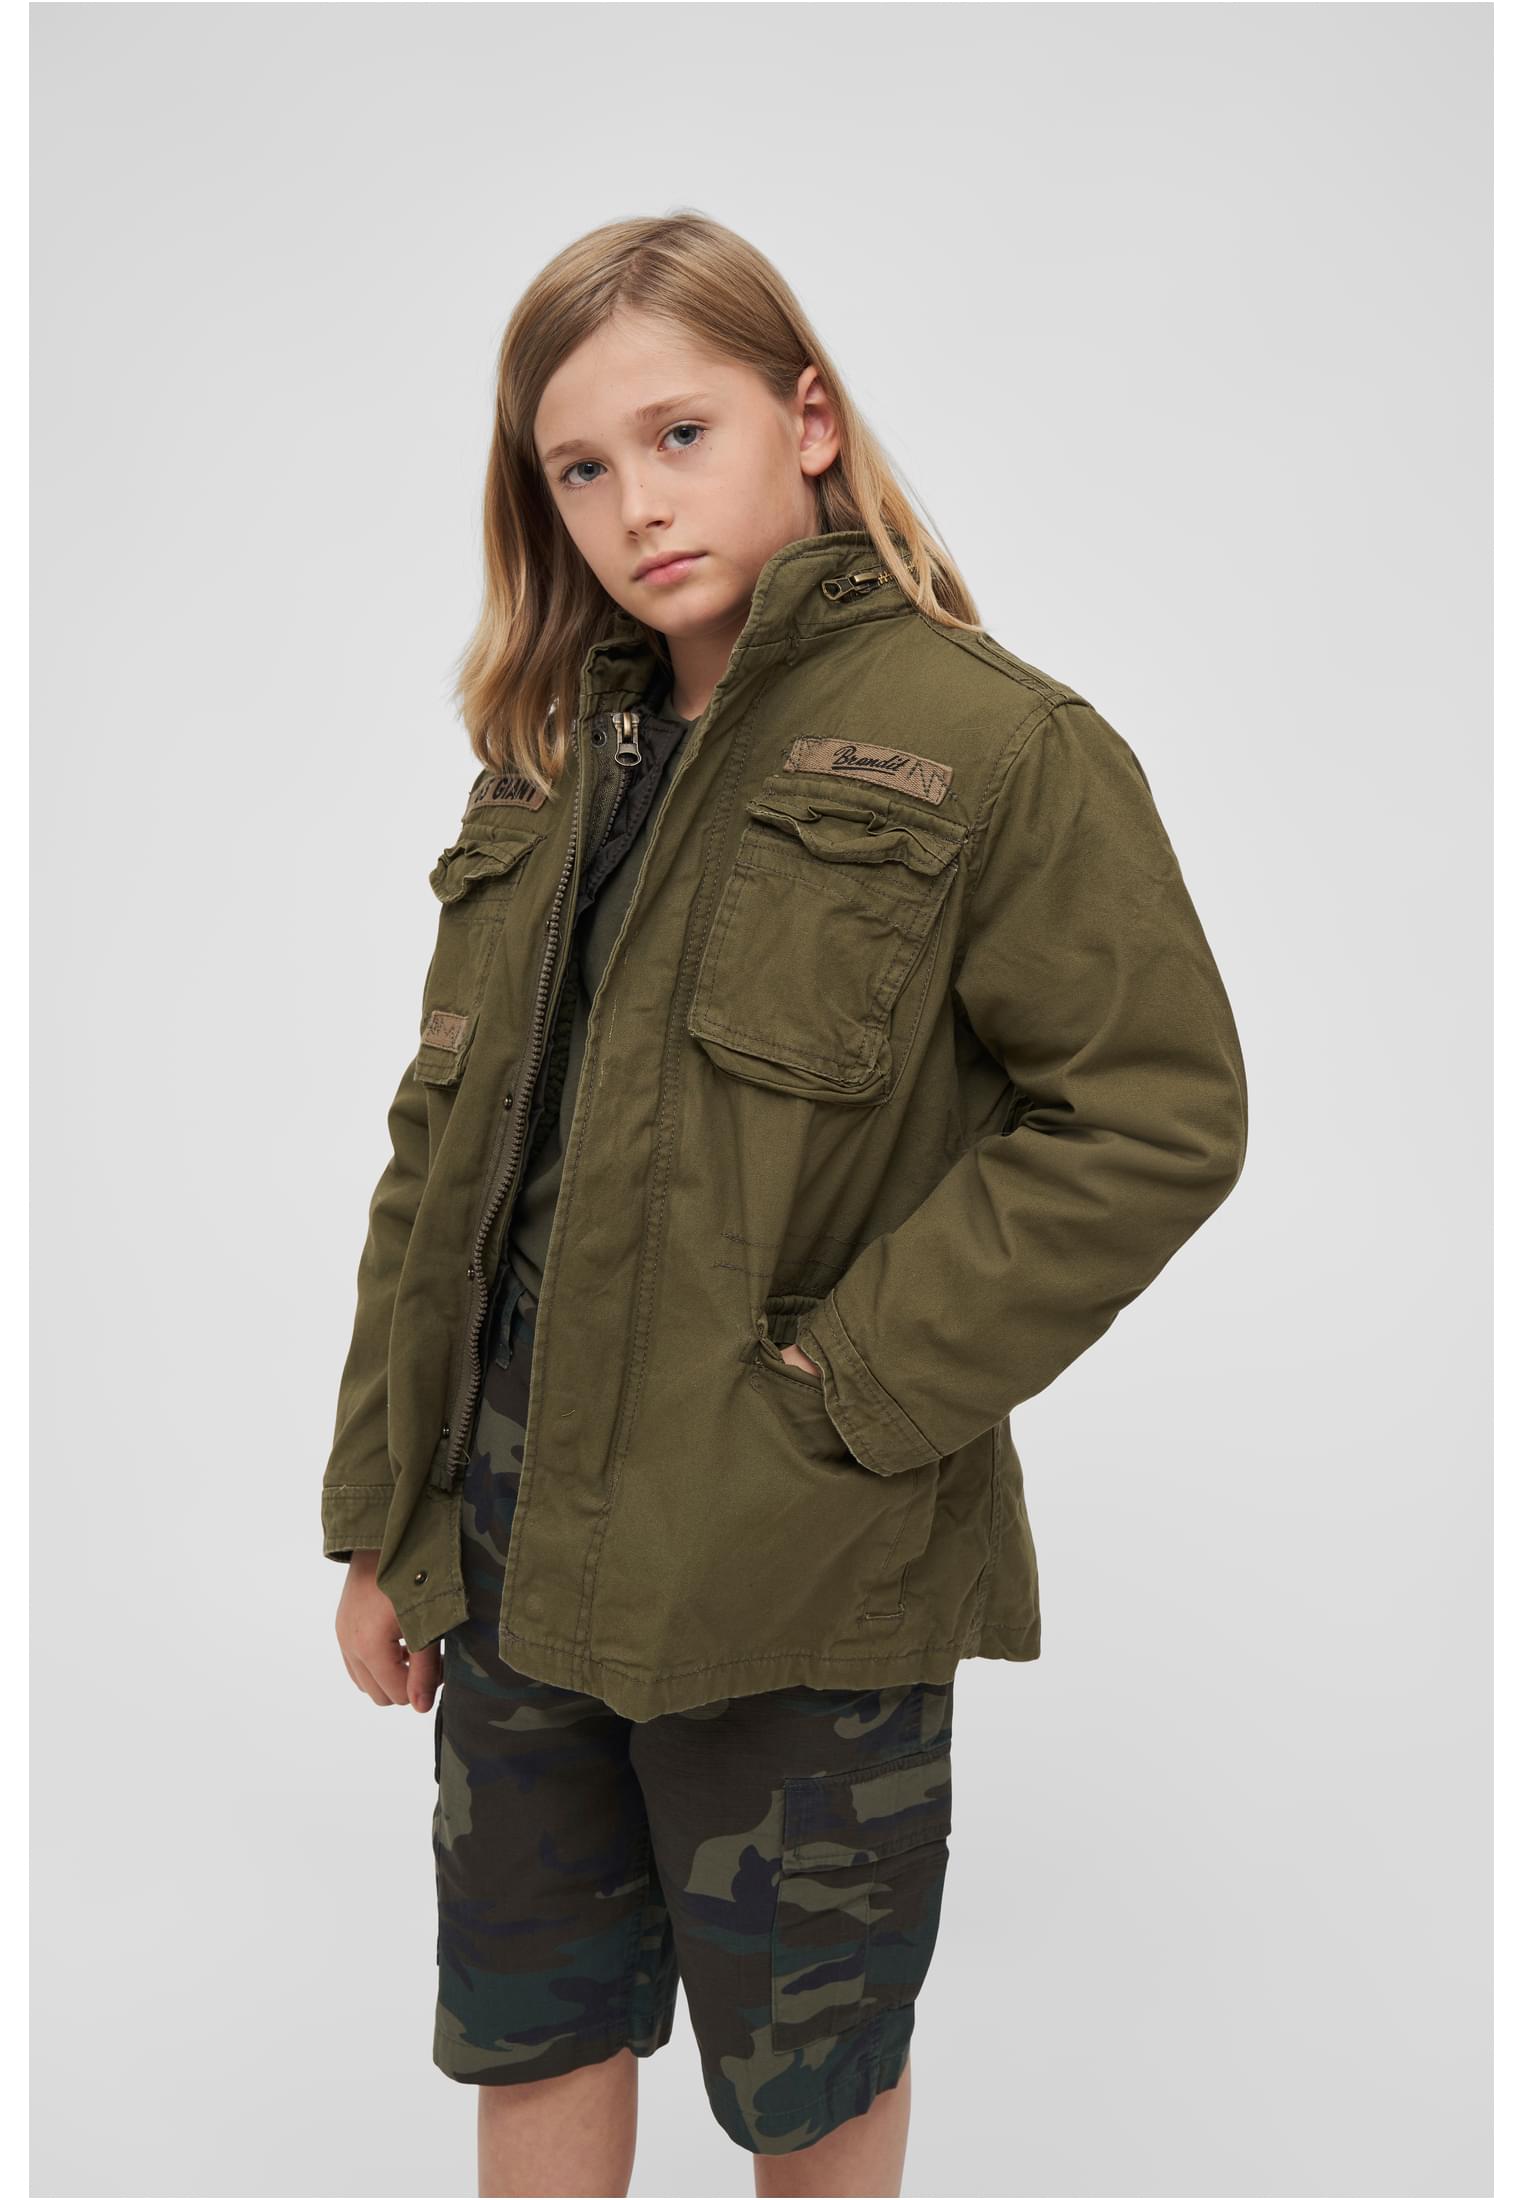 Children's jacket M65 Giant olive